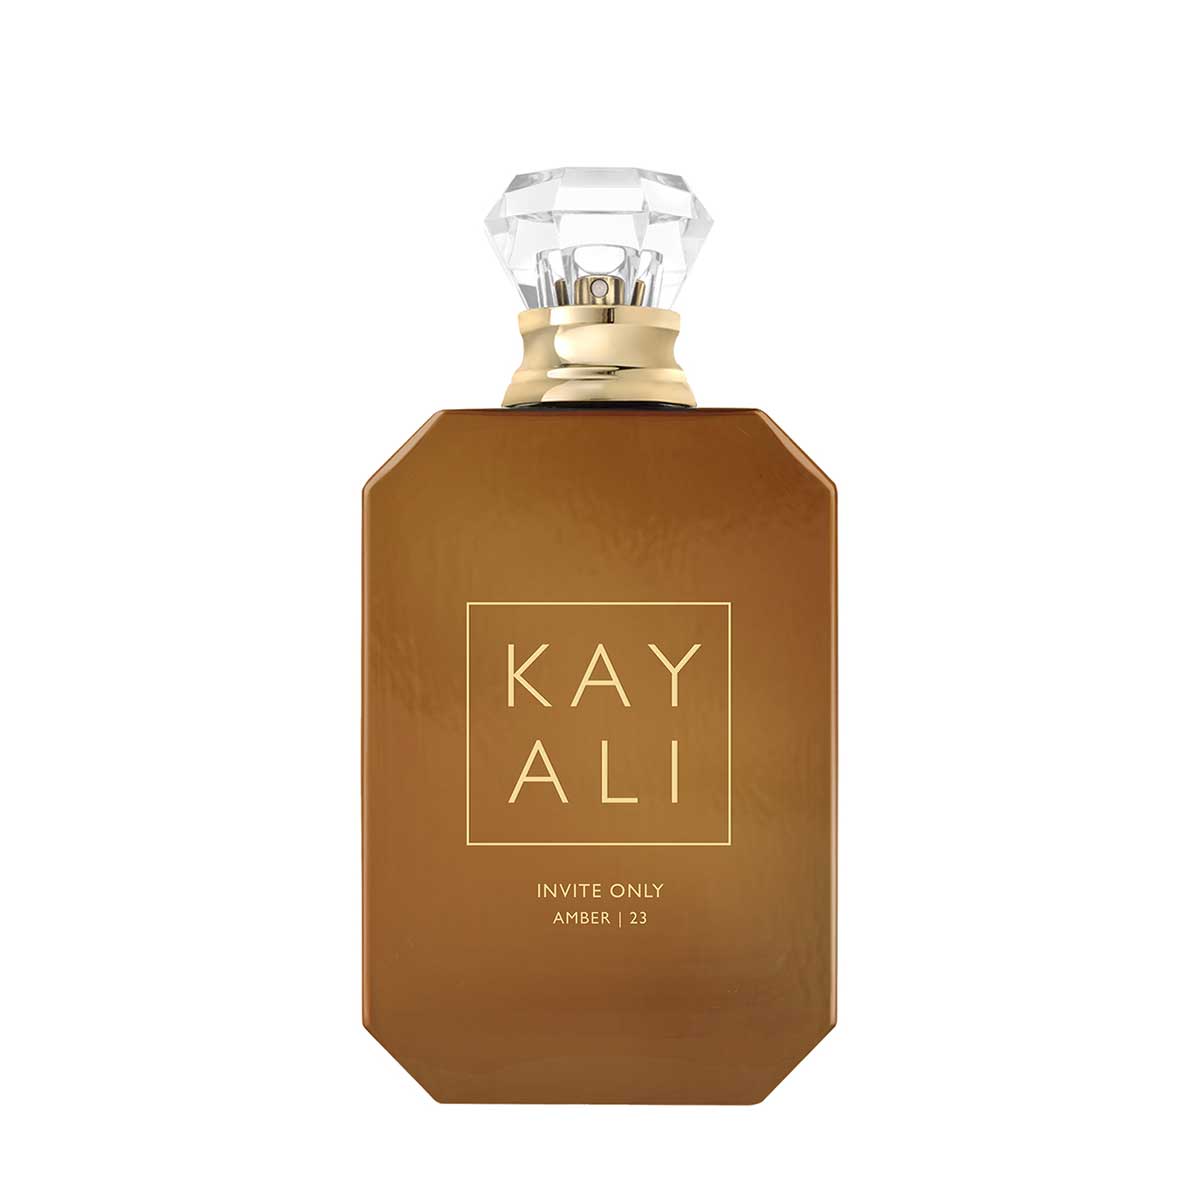 kayali invite only amber | 23 eau de parfum intense 50ml